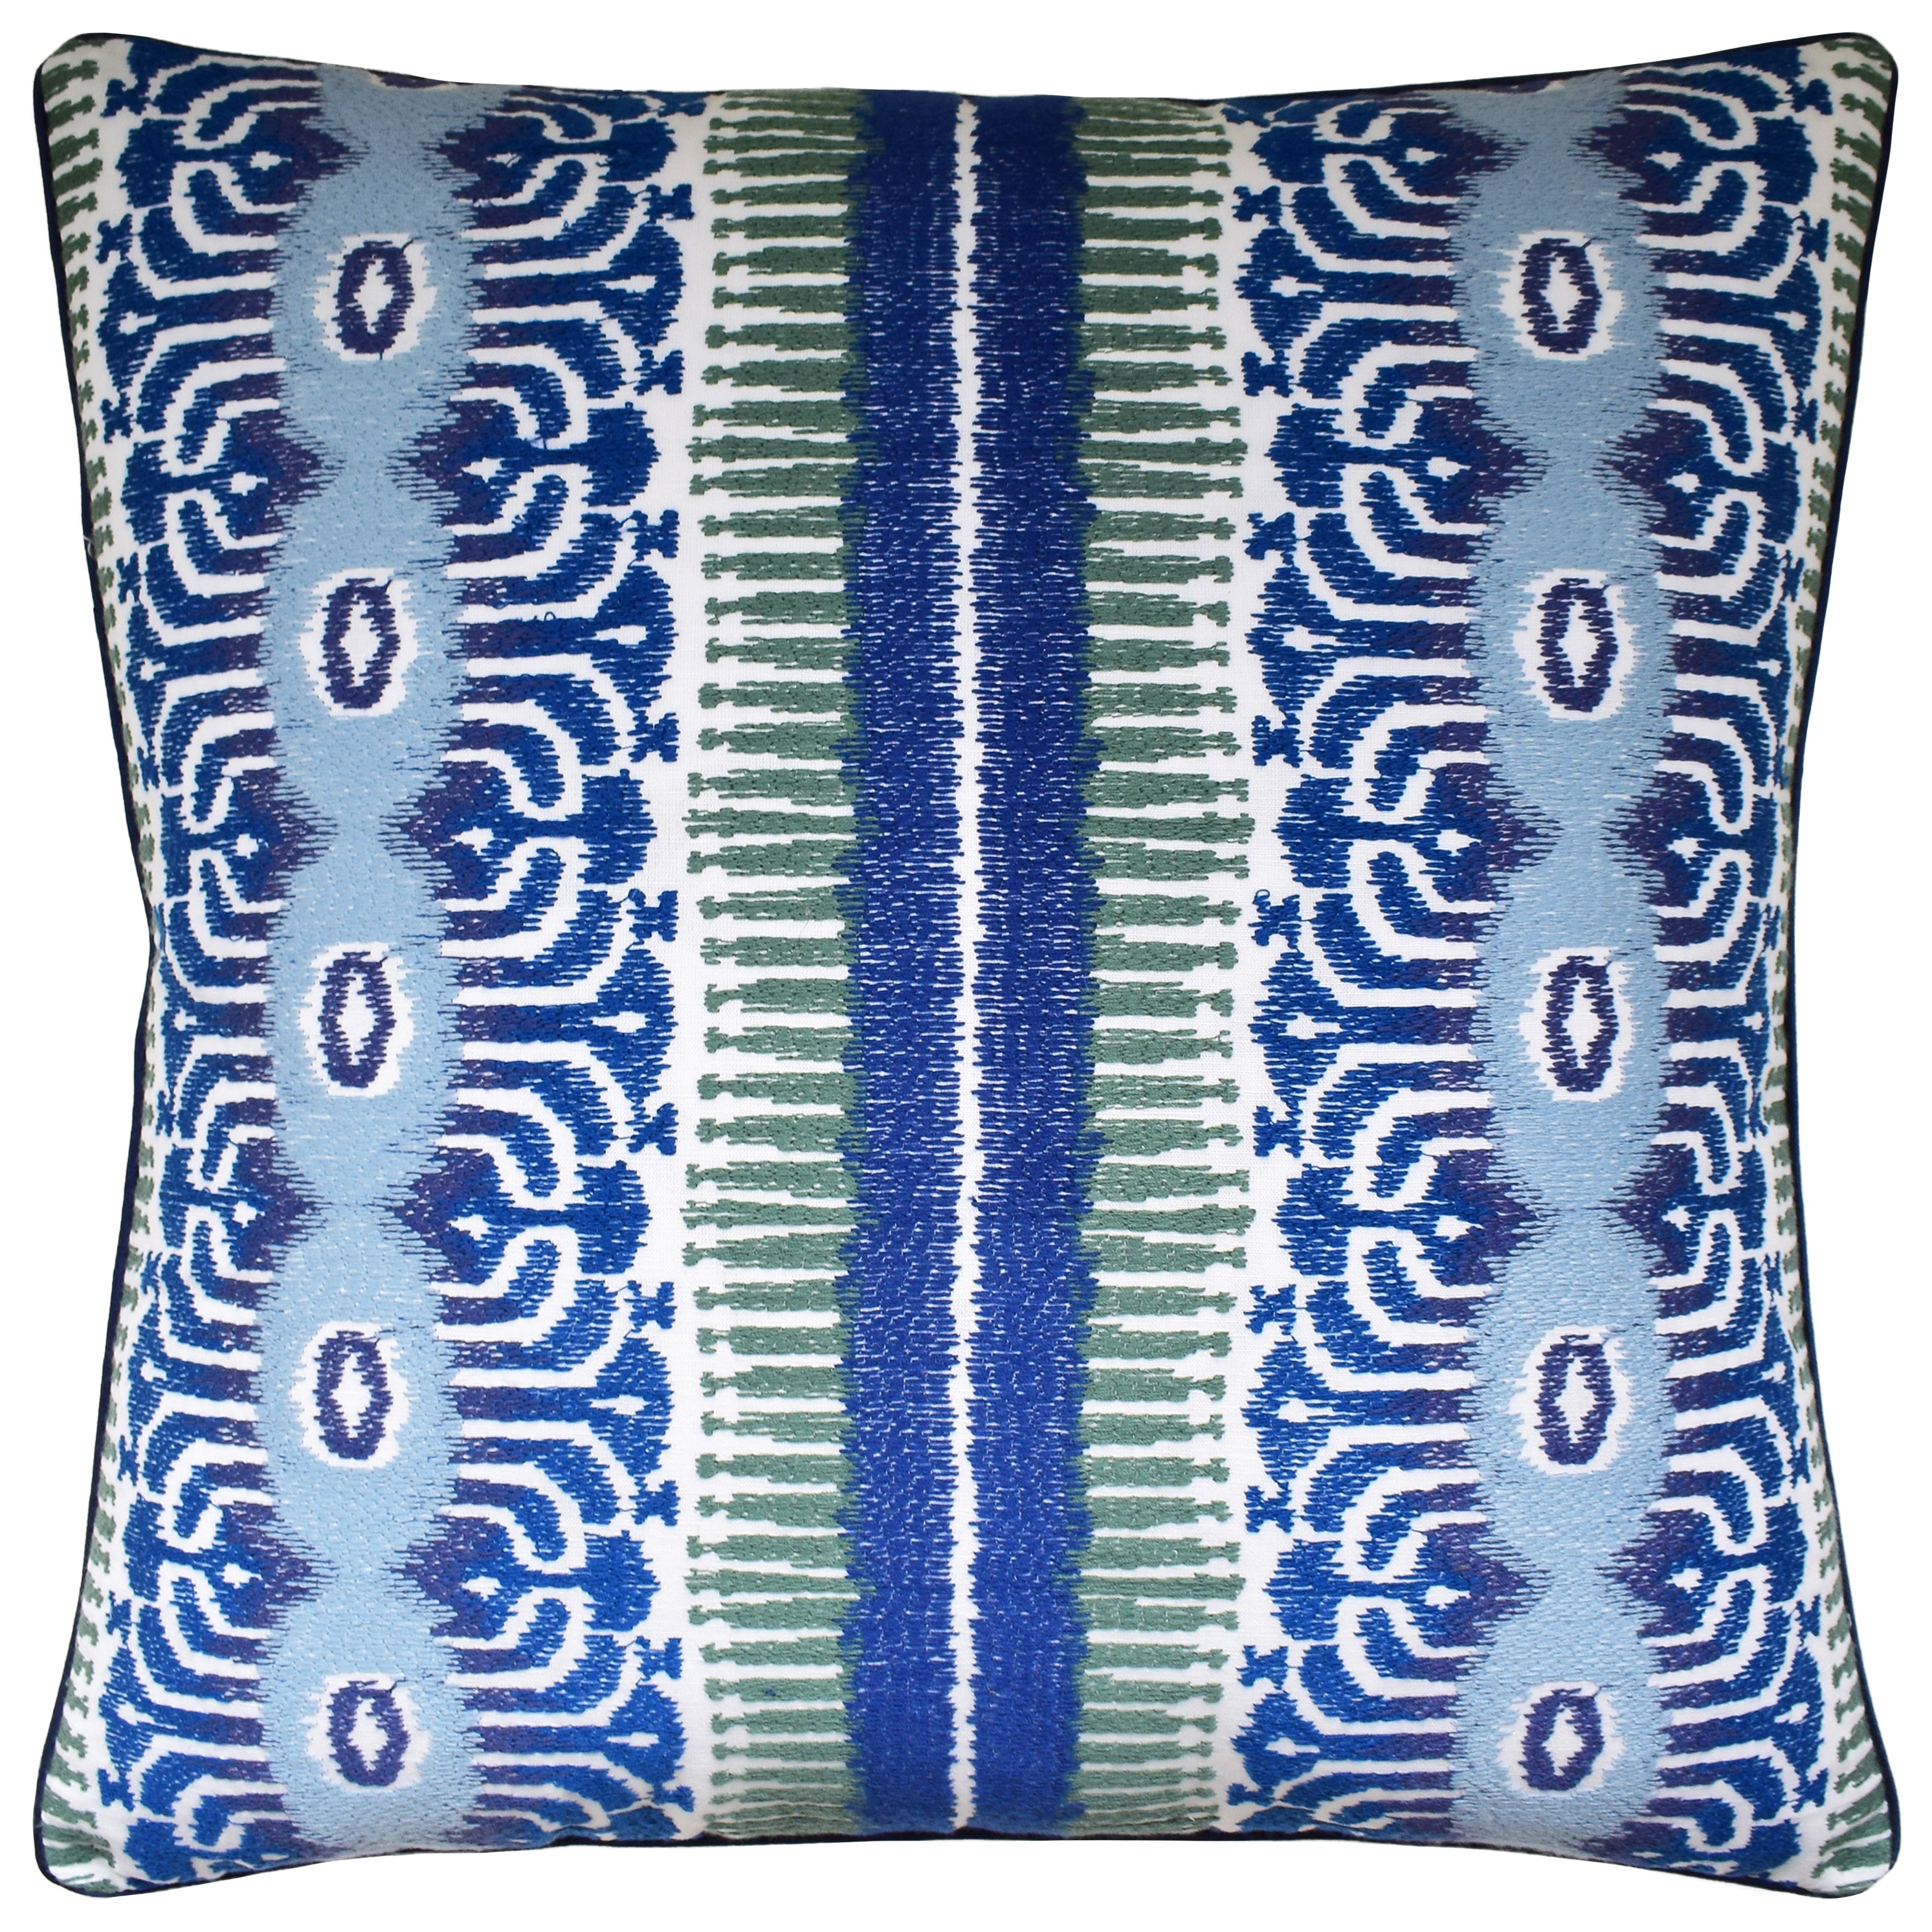 Ryan Studio Frazada Decorative Pillow